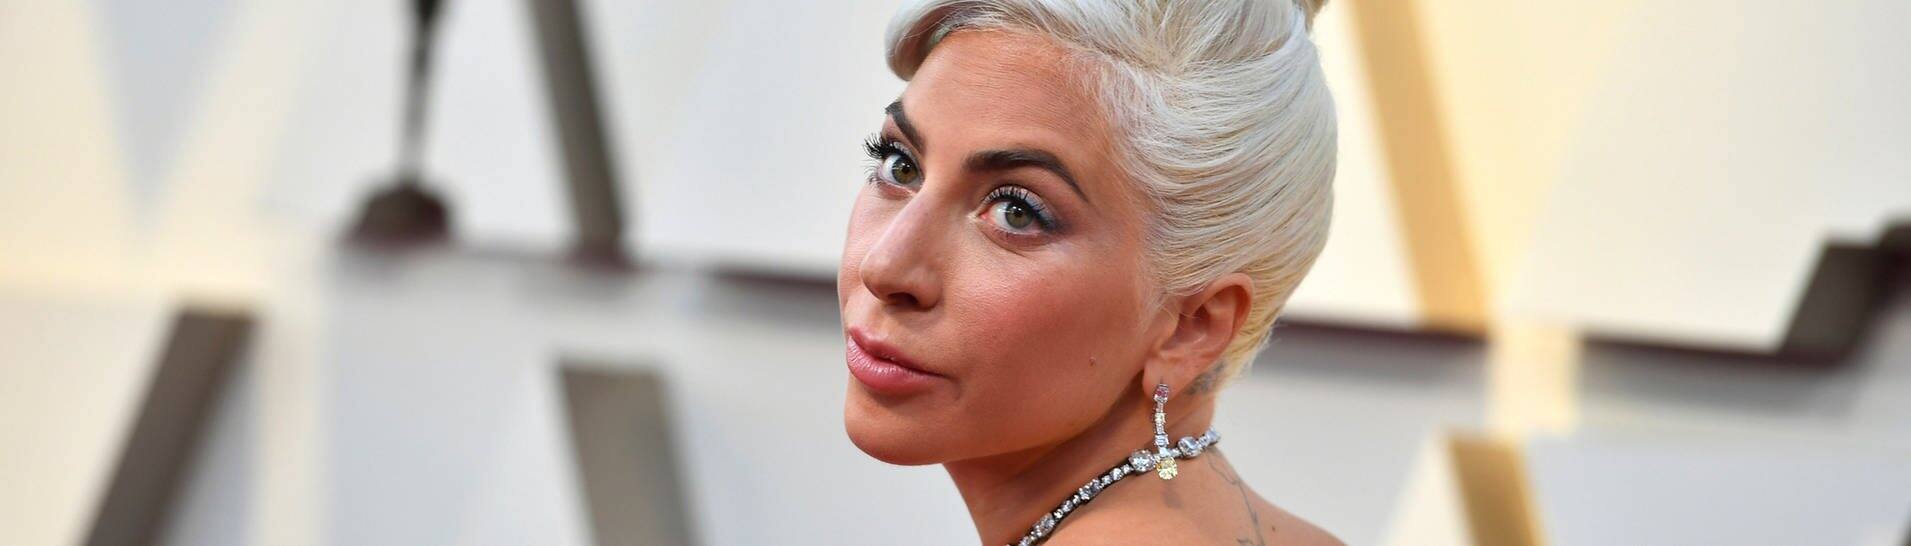 Lady Gaga (Foto: dpa Bildfunk, picture alliance/dpa | Jordan Strauss)